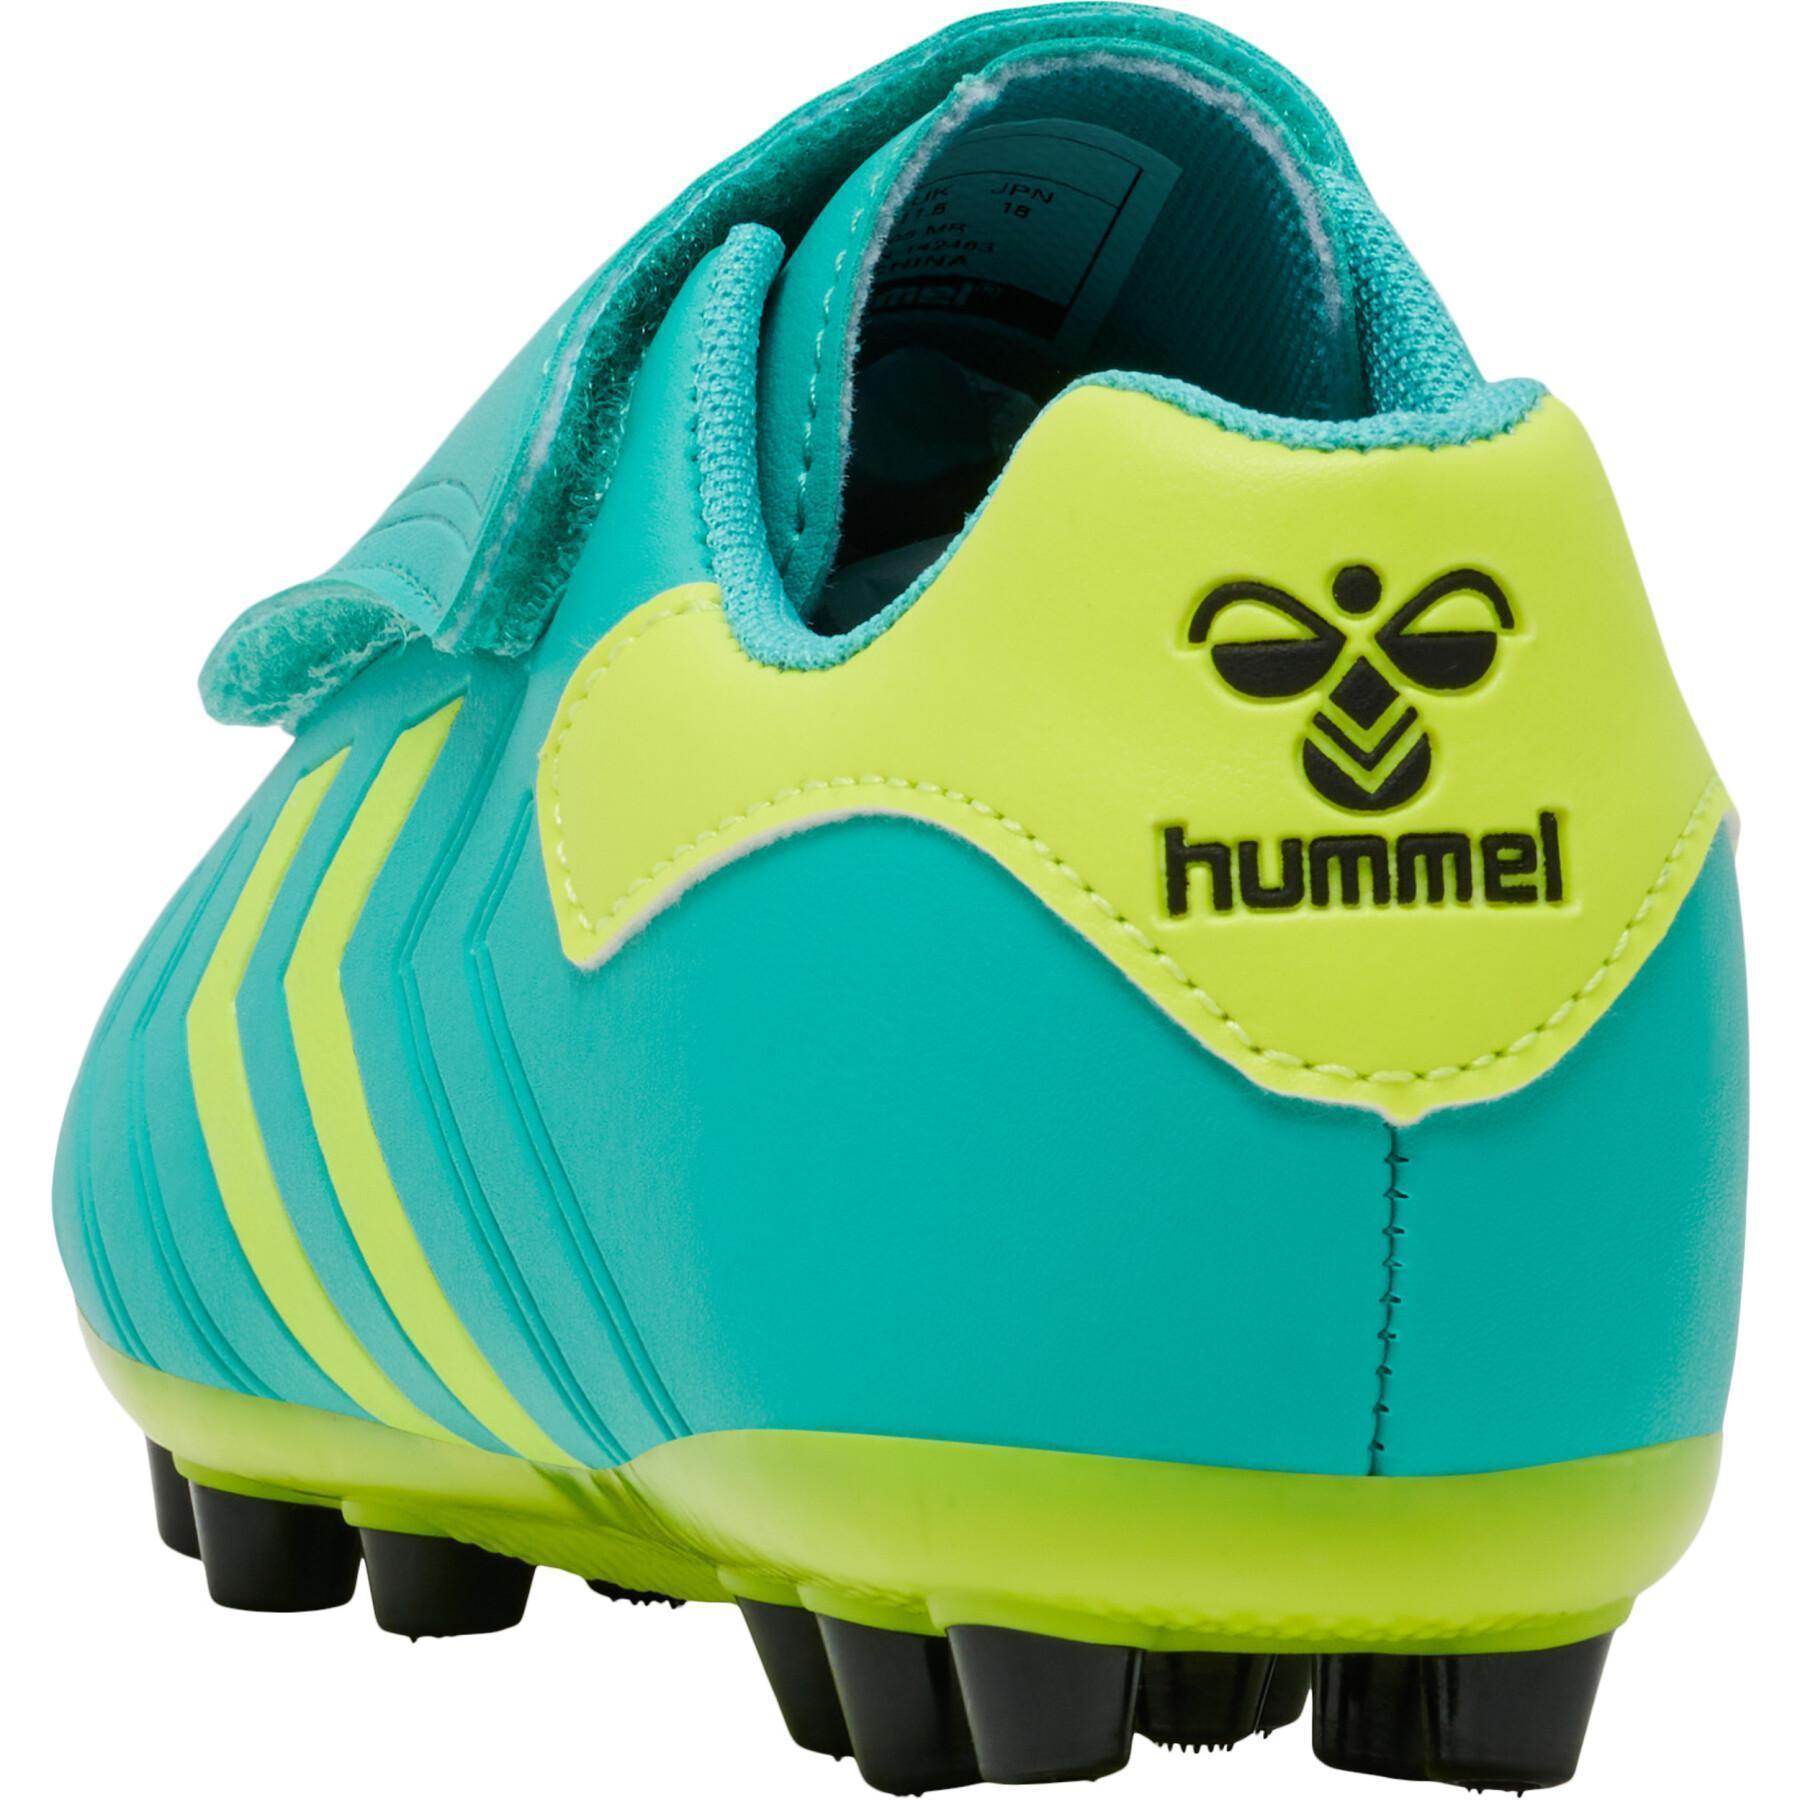 Children's Soccer cleats Hummel Hattrick M.G.